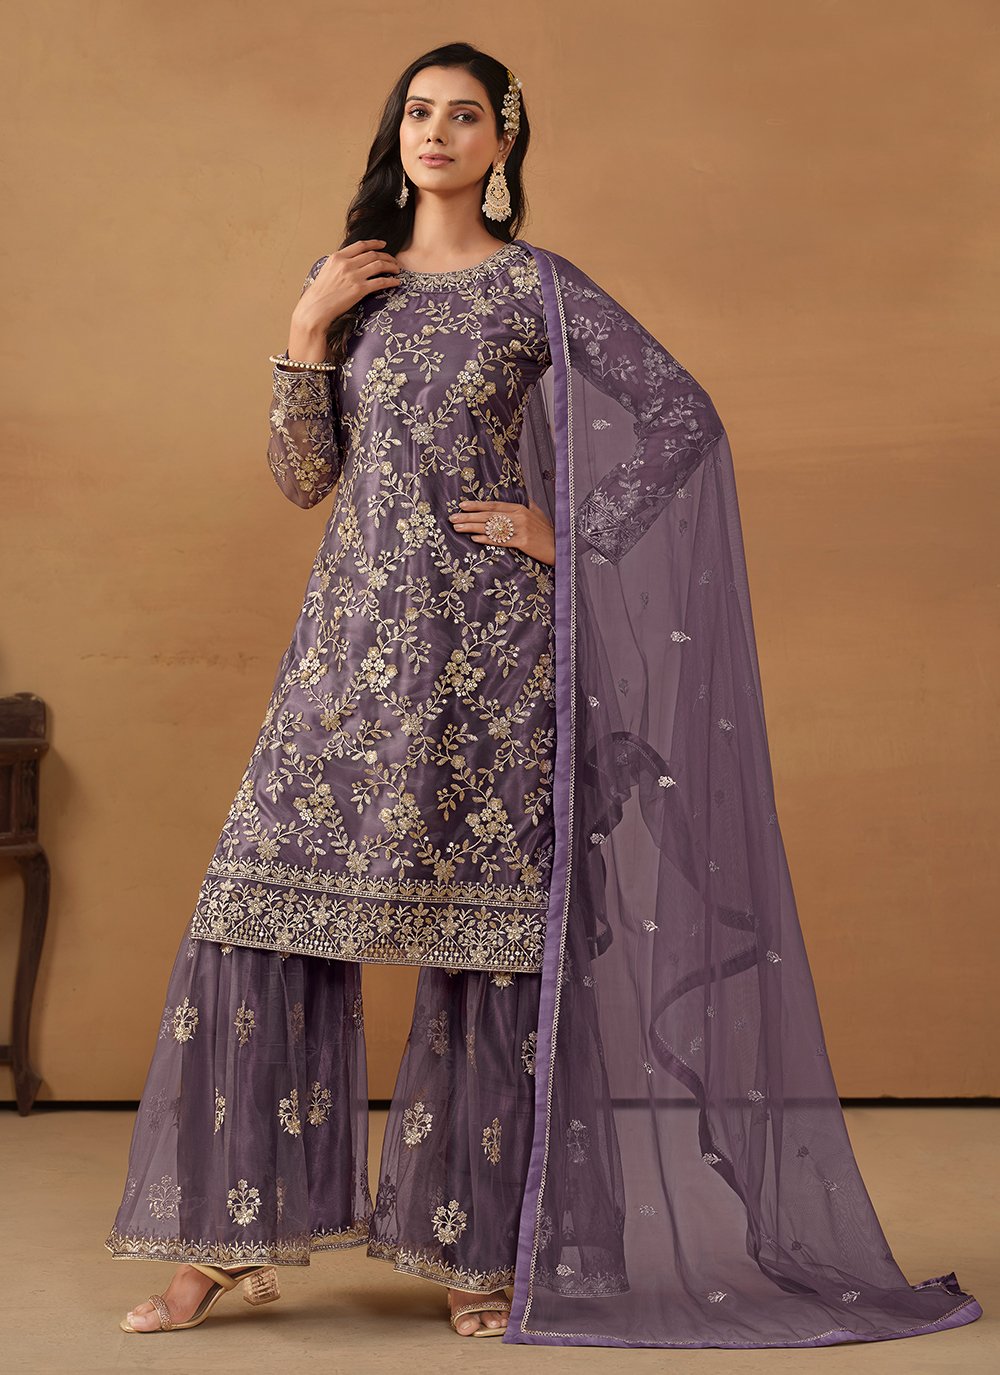 Purple Color Net Fabric Sequins Work Palazzo Suit For Women